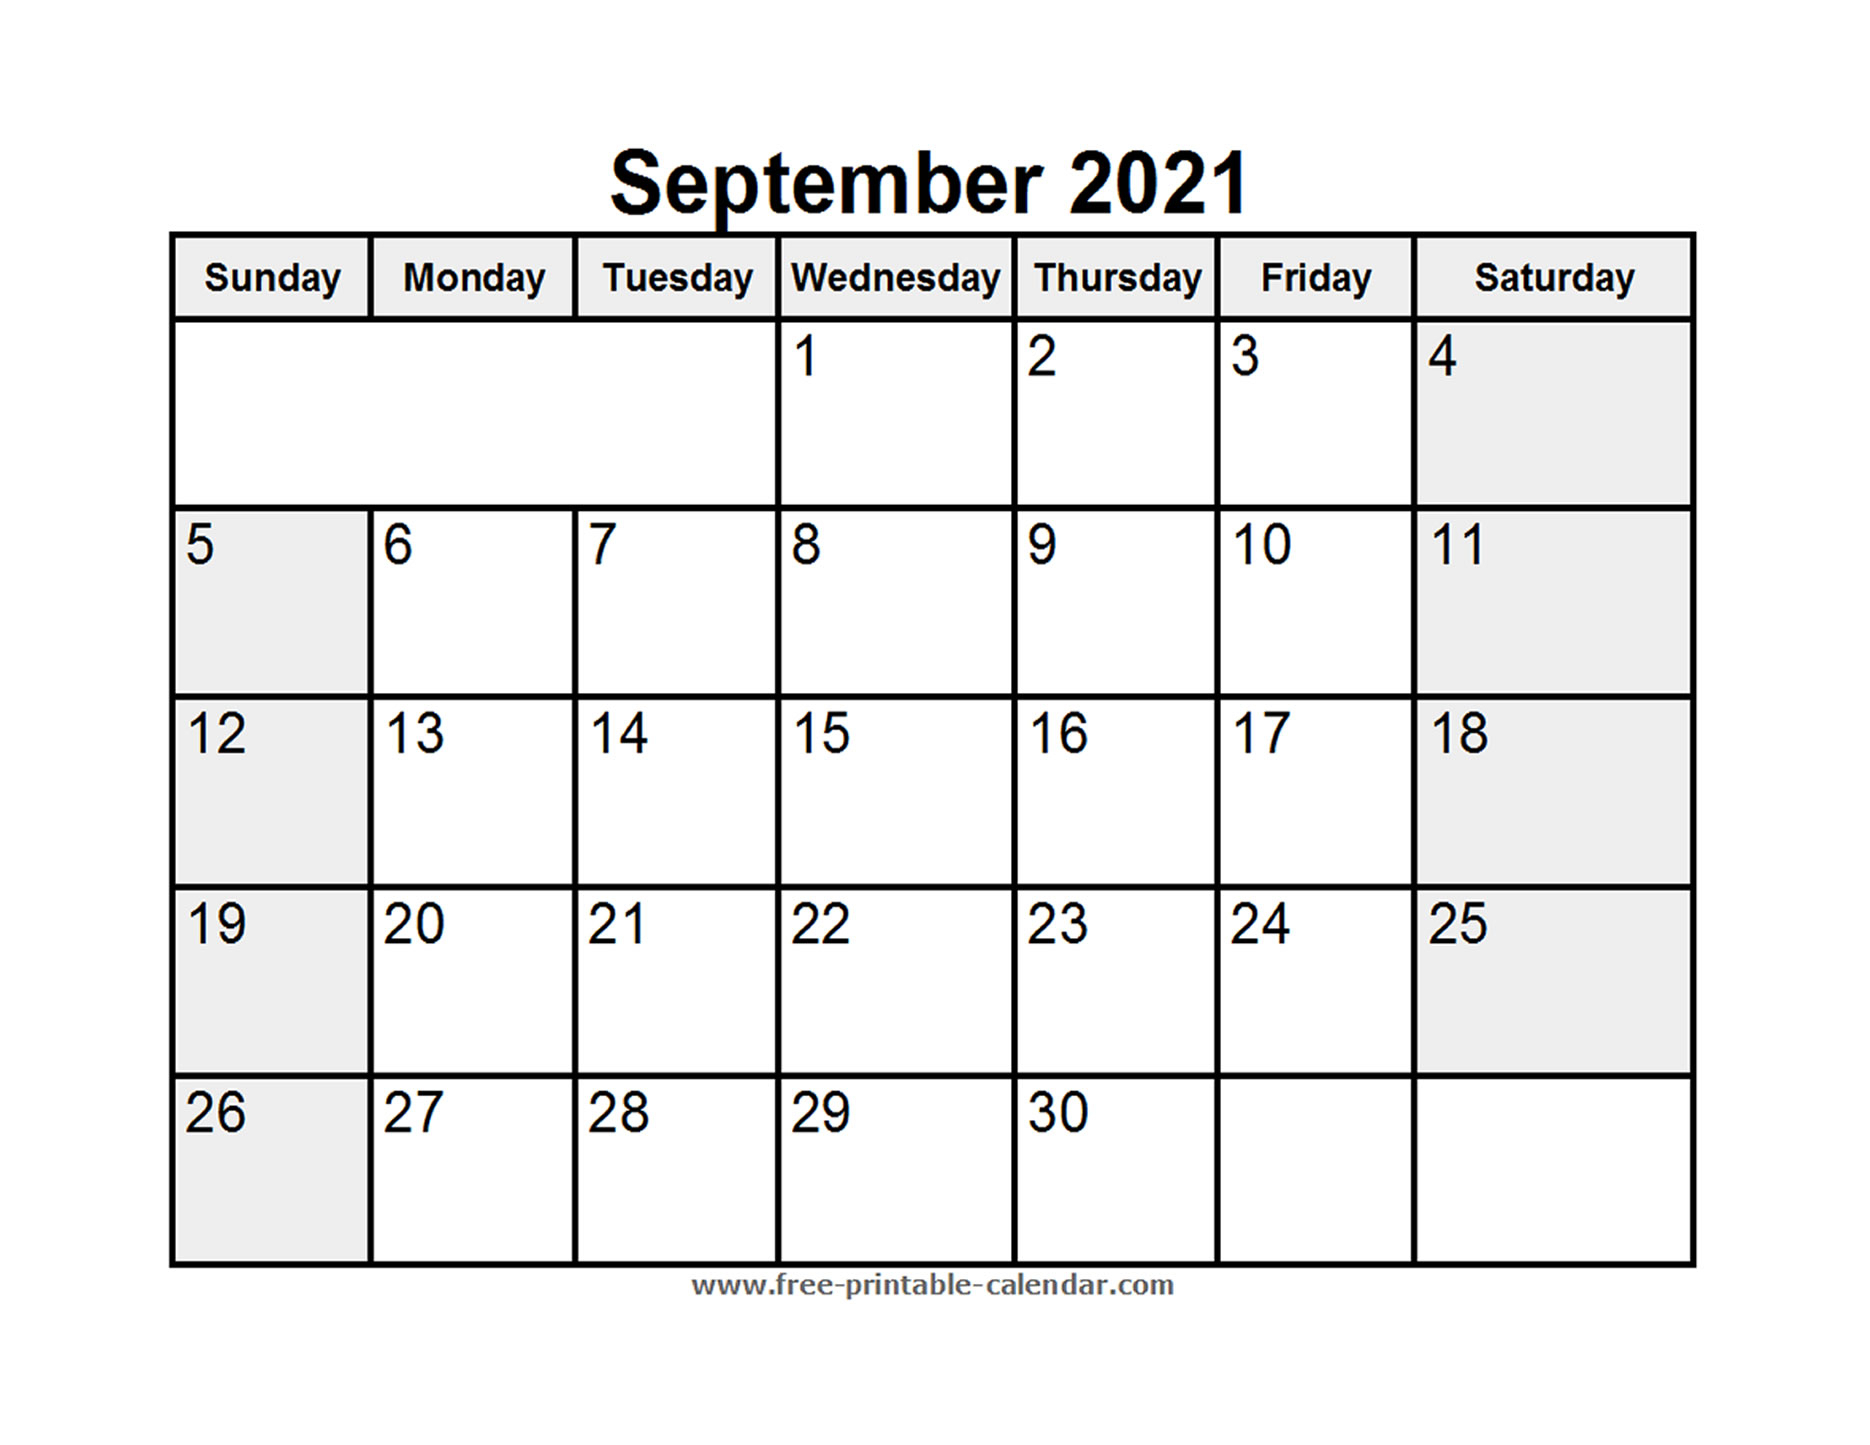 Printable September 2021 Calendar - Free-Printable